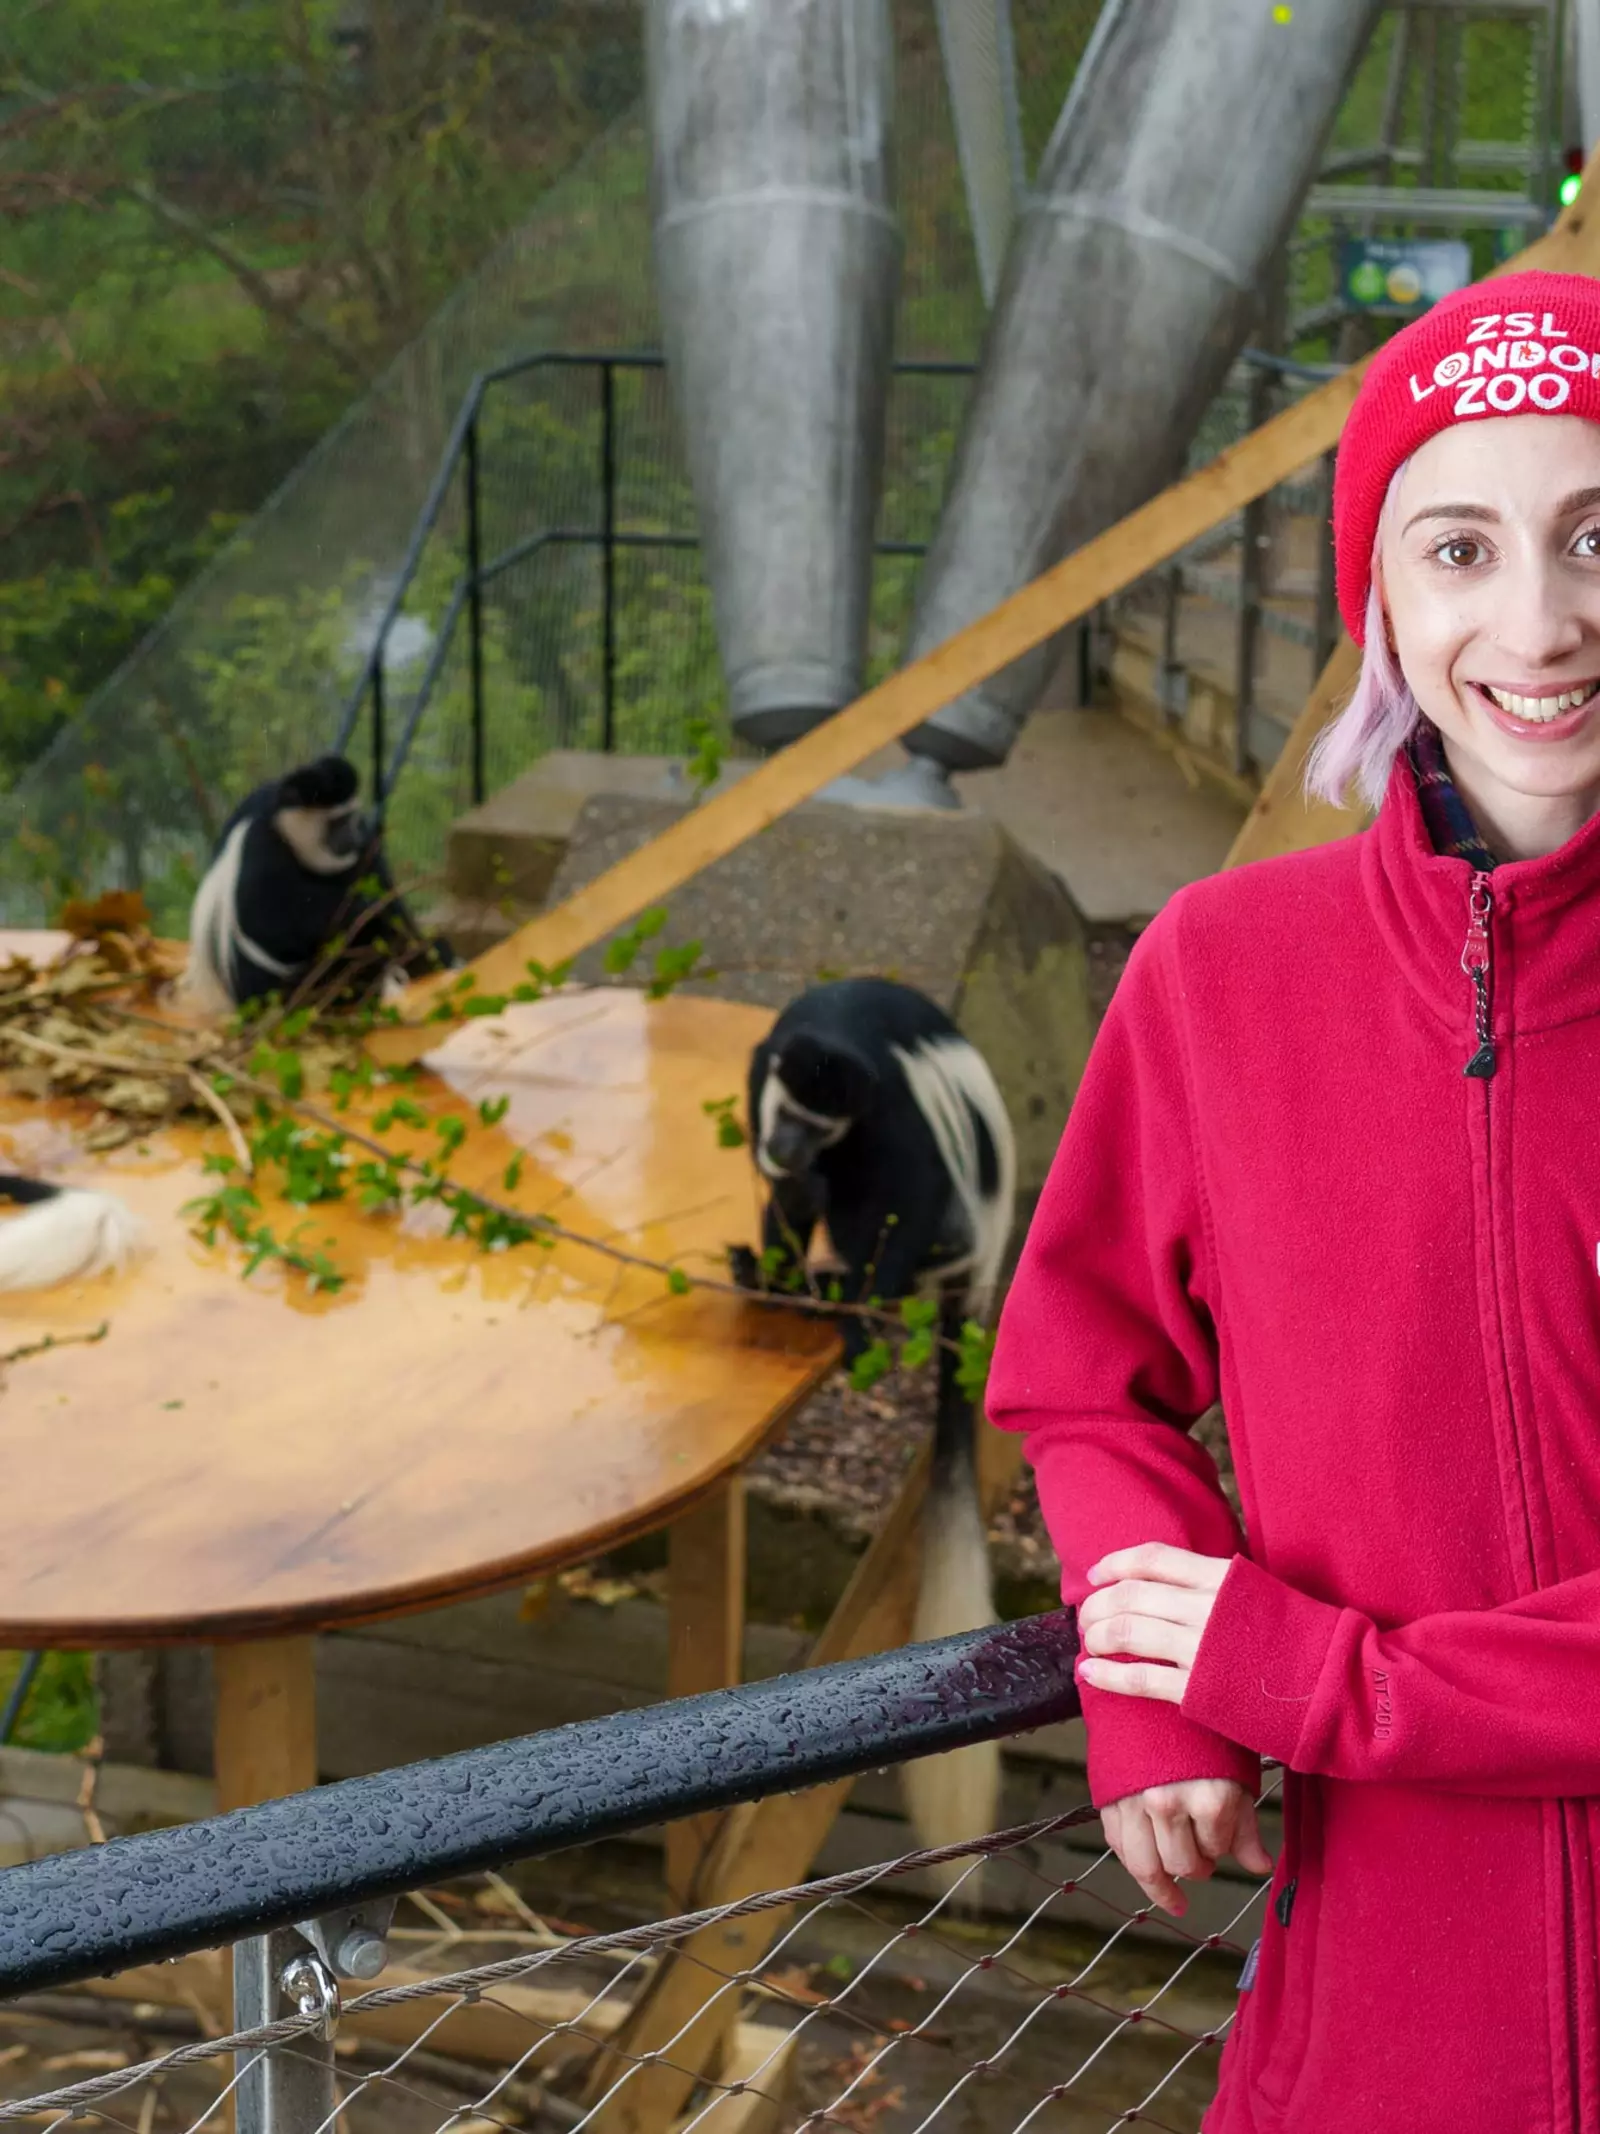 London Zoo volunteer at Monkey Valley with Colobus monkeys